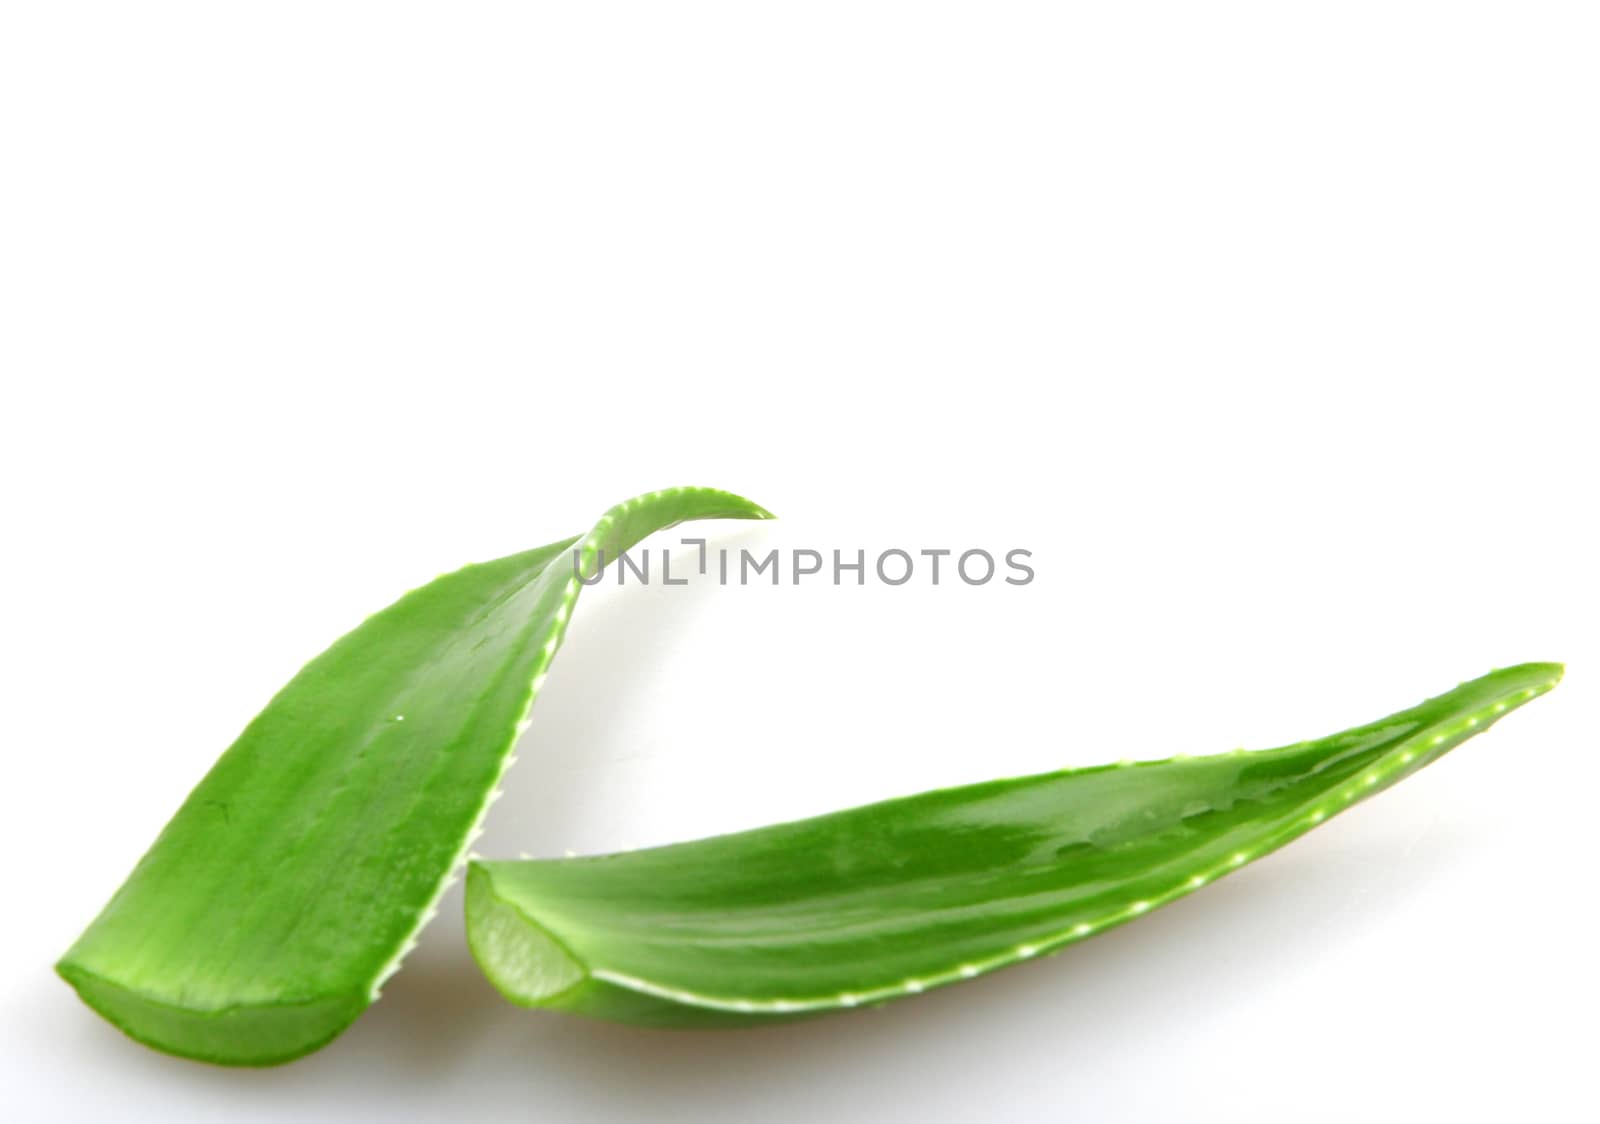 Aloe vera plant isolated on white by nenov